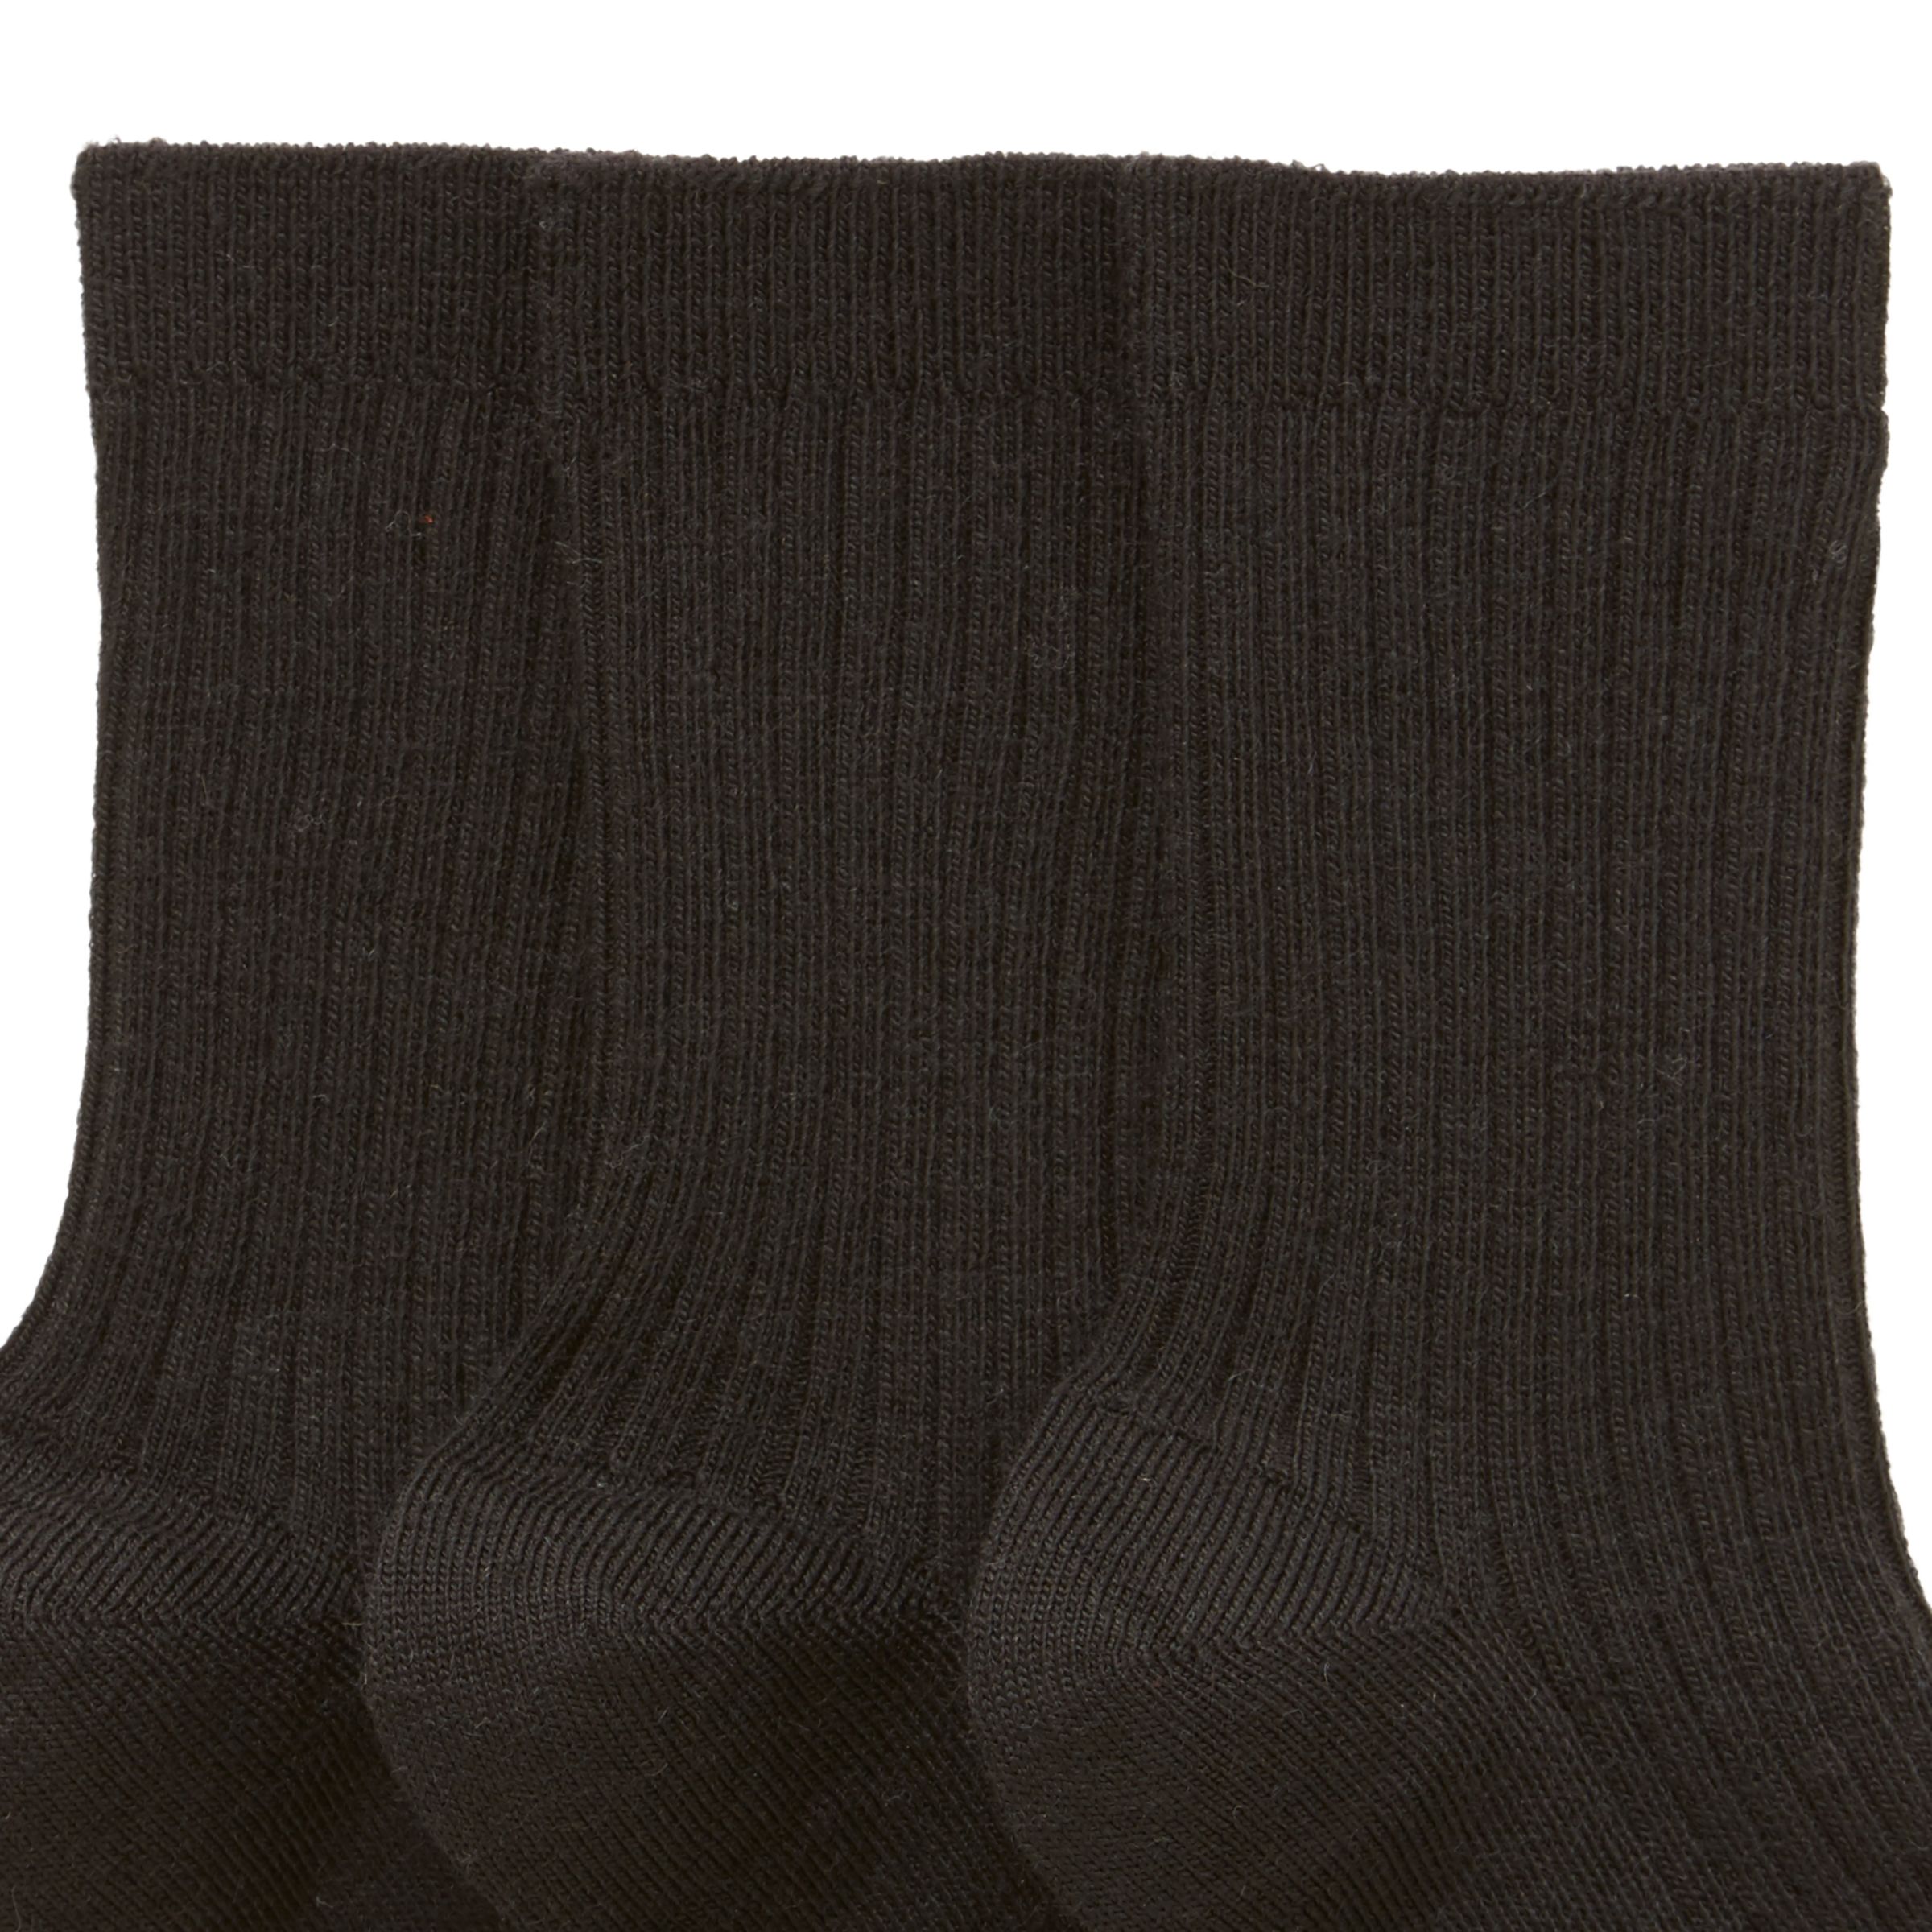 Buy John Lewis Children's Wool Rich Socks, Pack of 3 Online at johnlewis.com